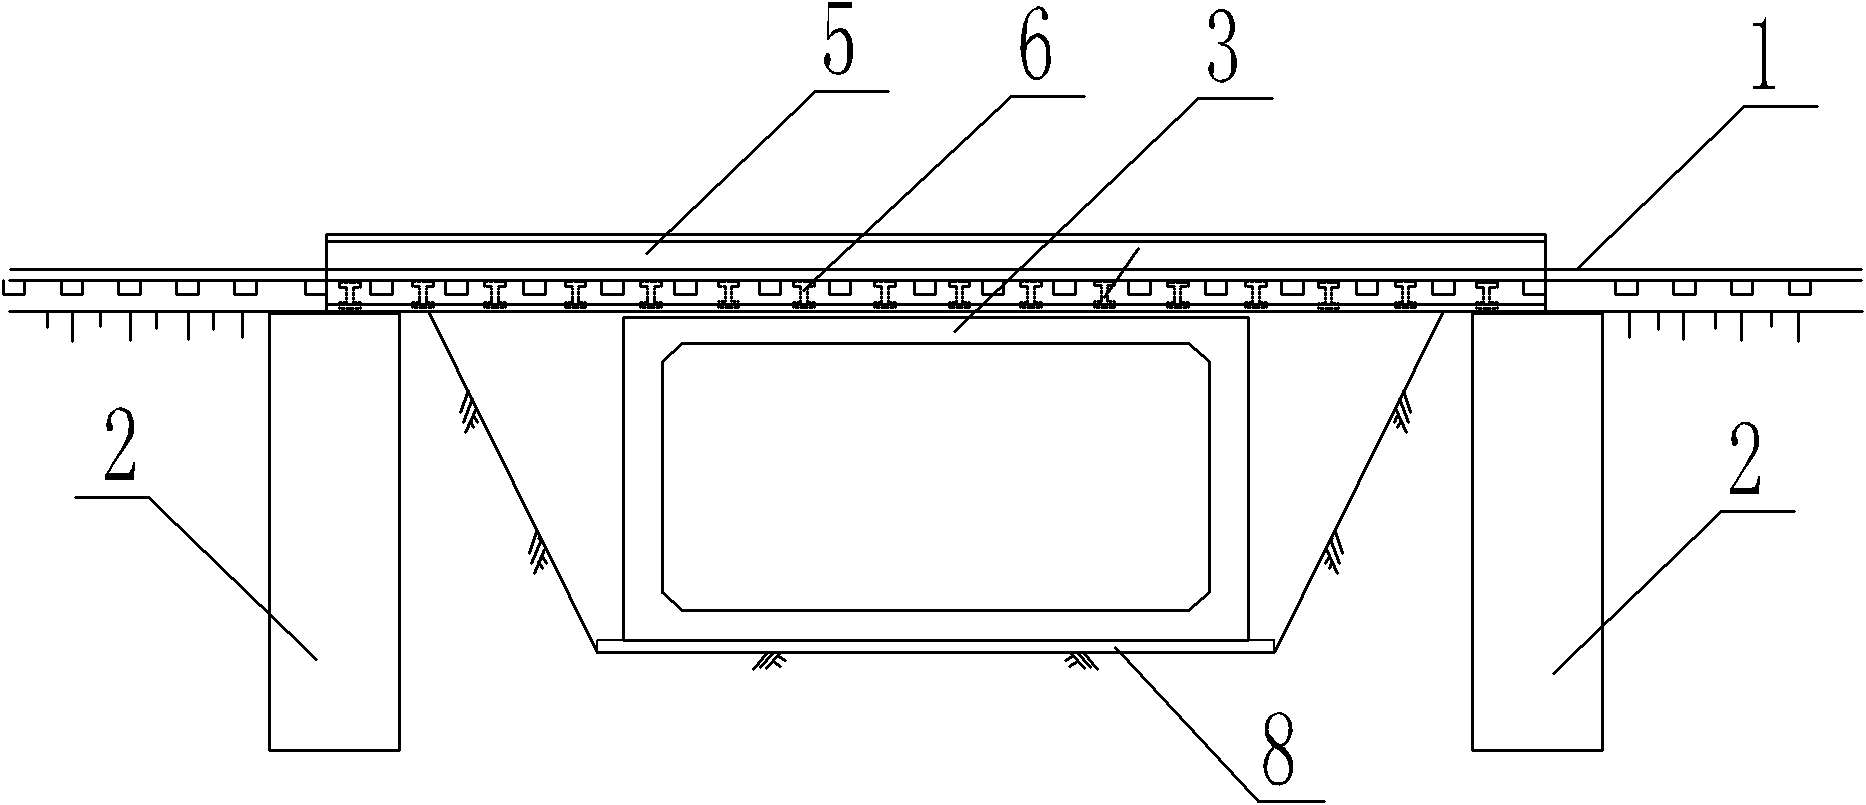 Construction method for underground box culvert of existing railway line